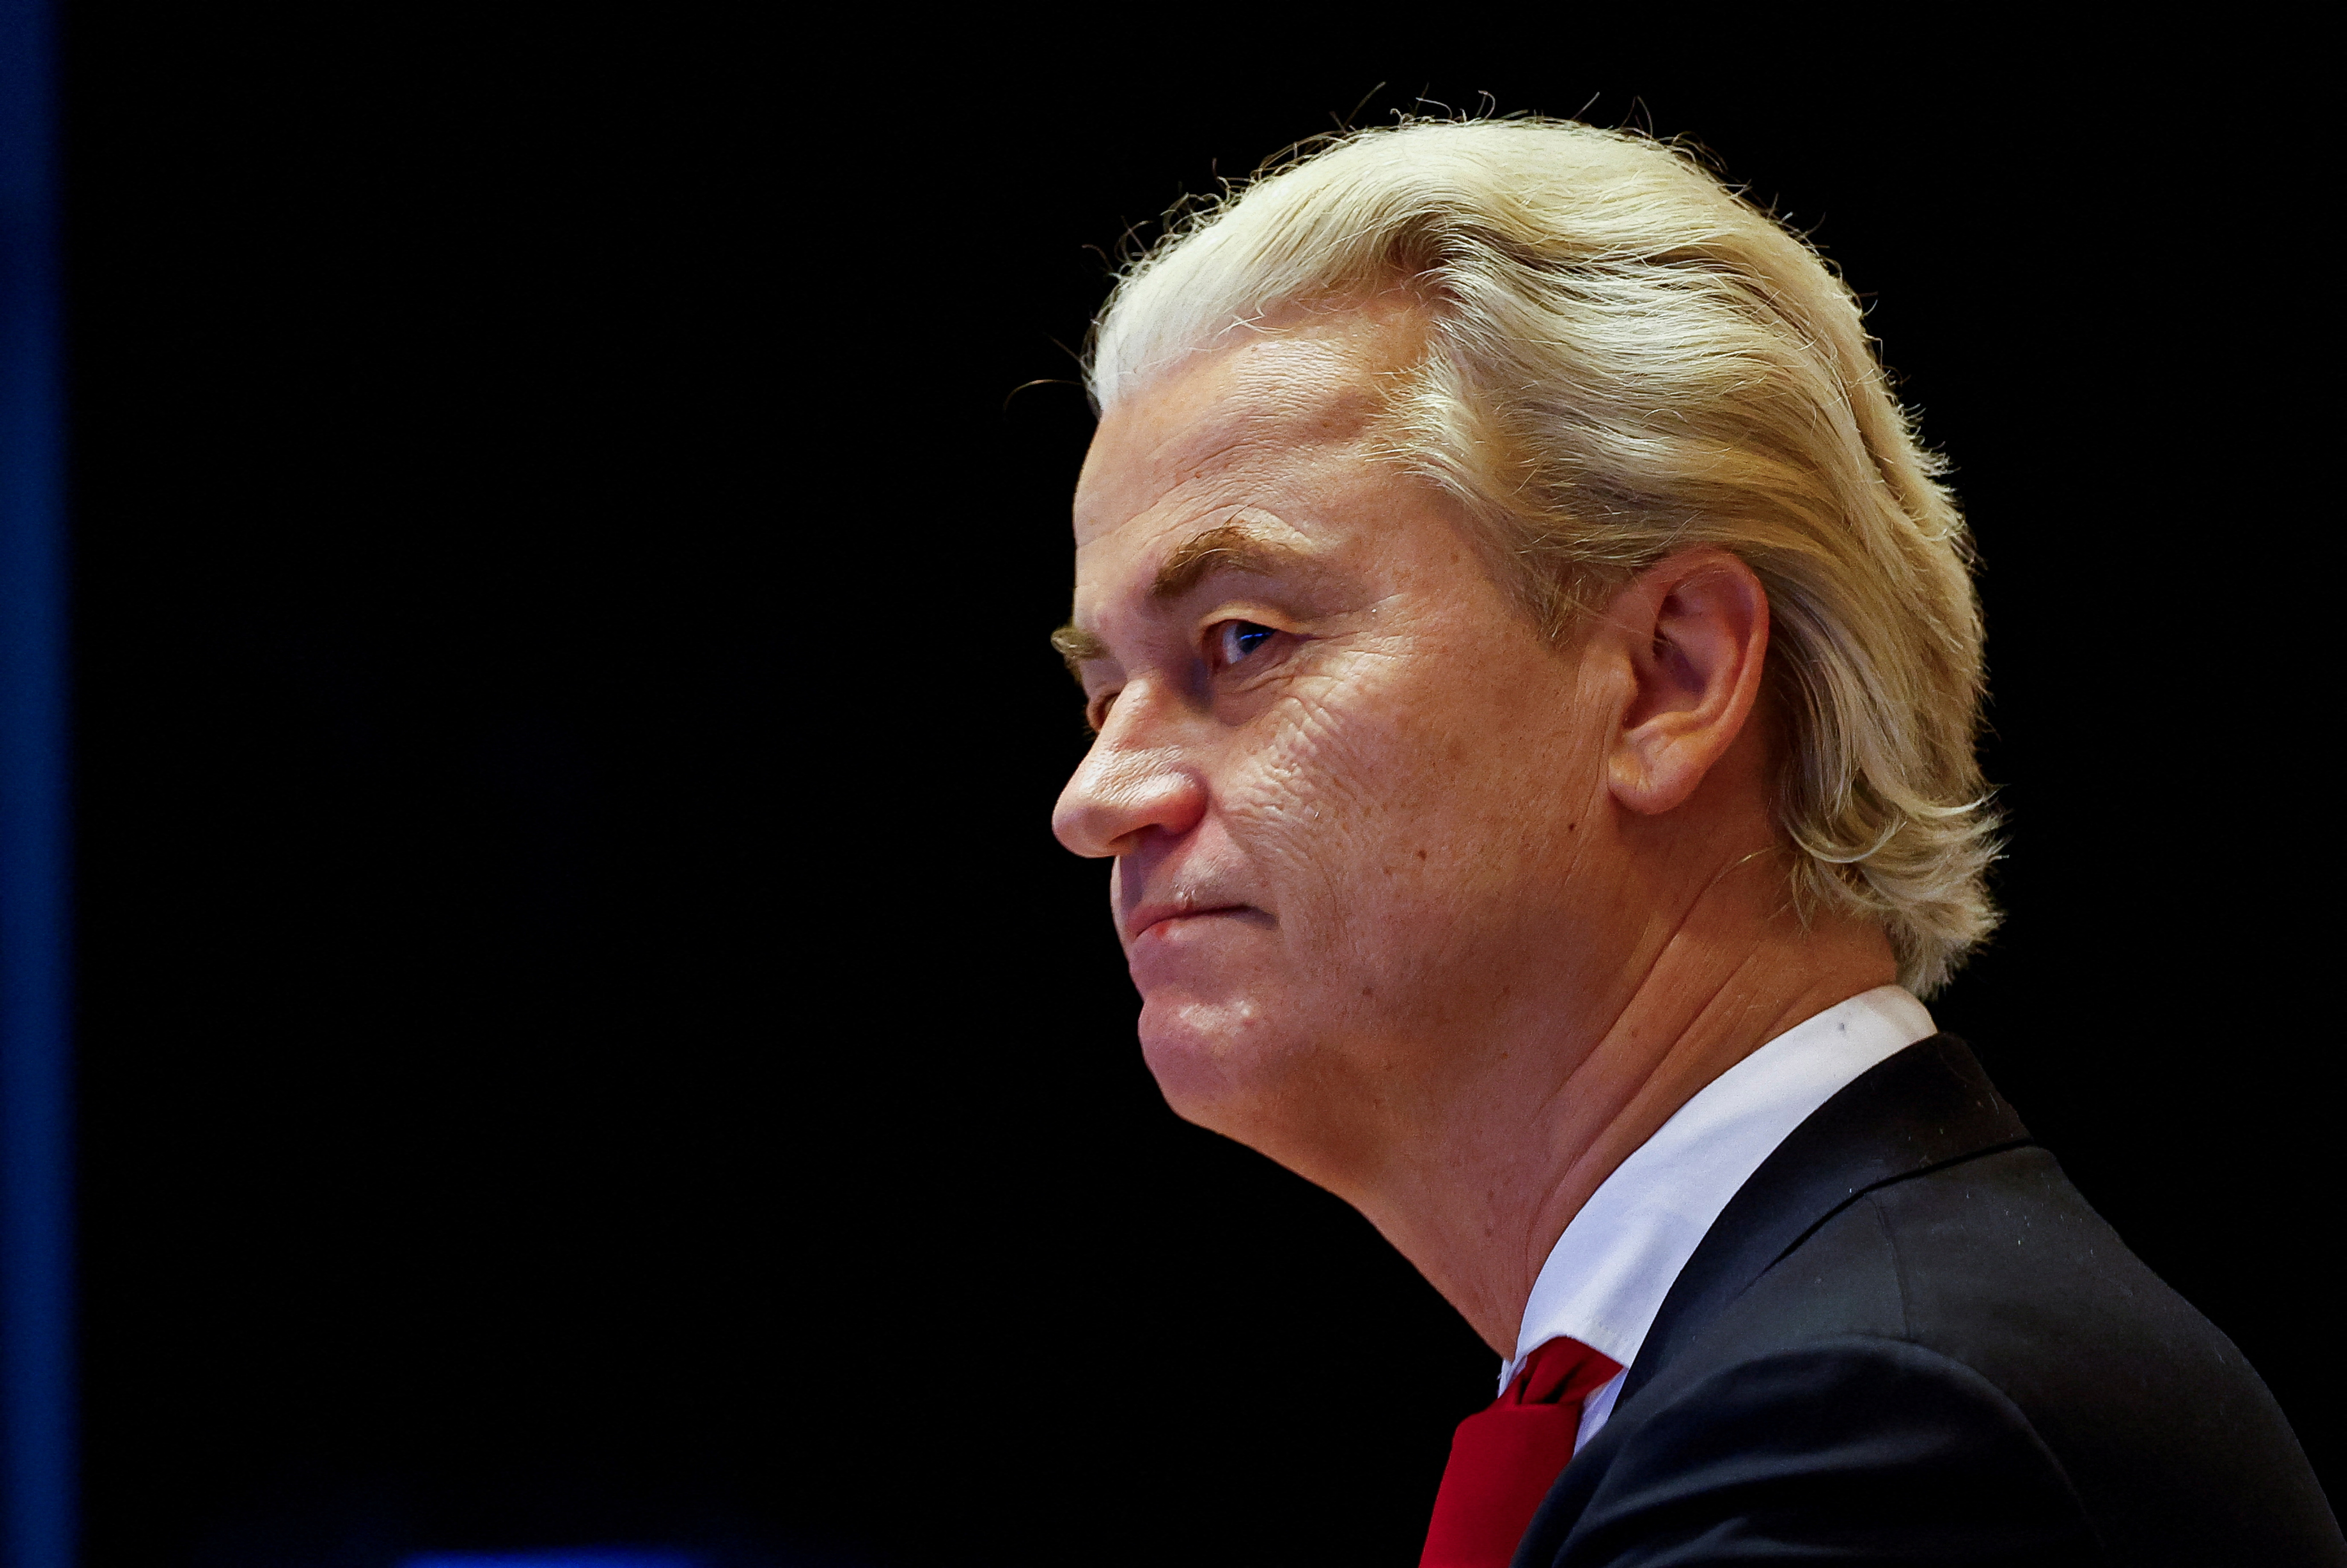 Dutch politicians meet after election to start coalition talks